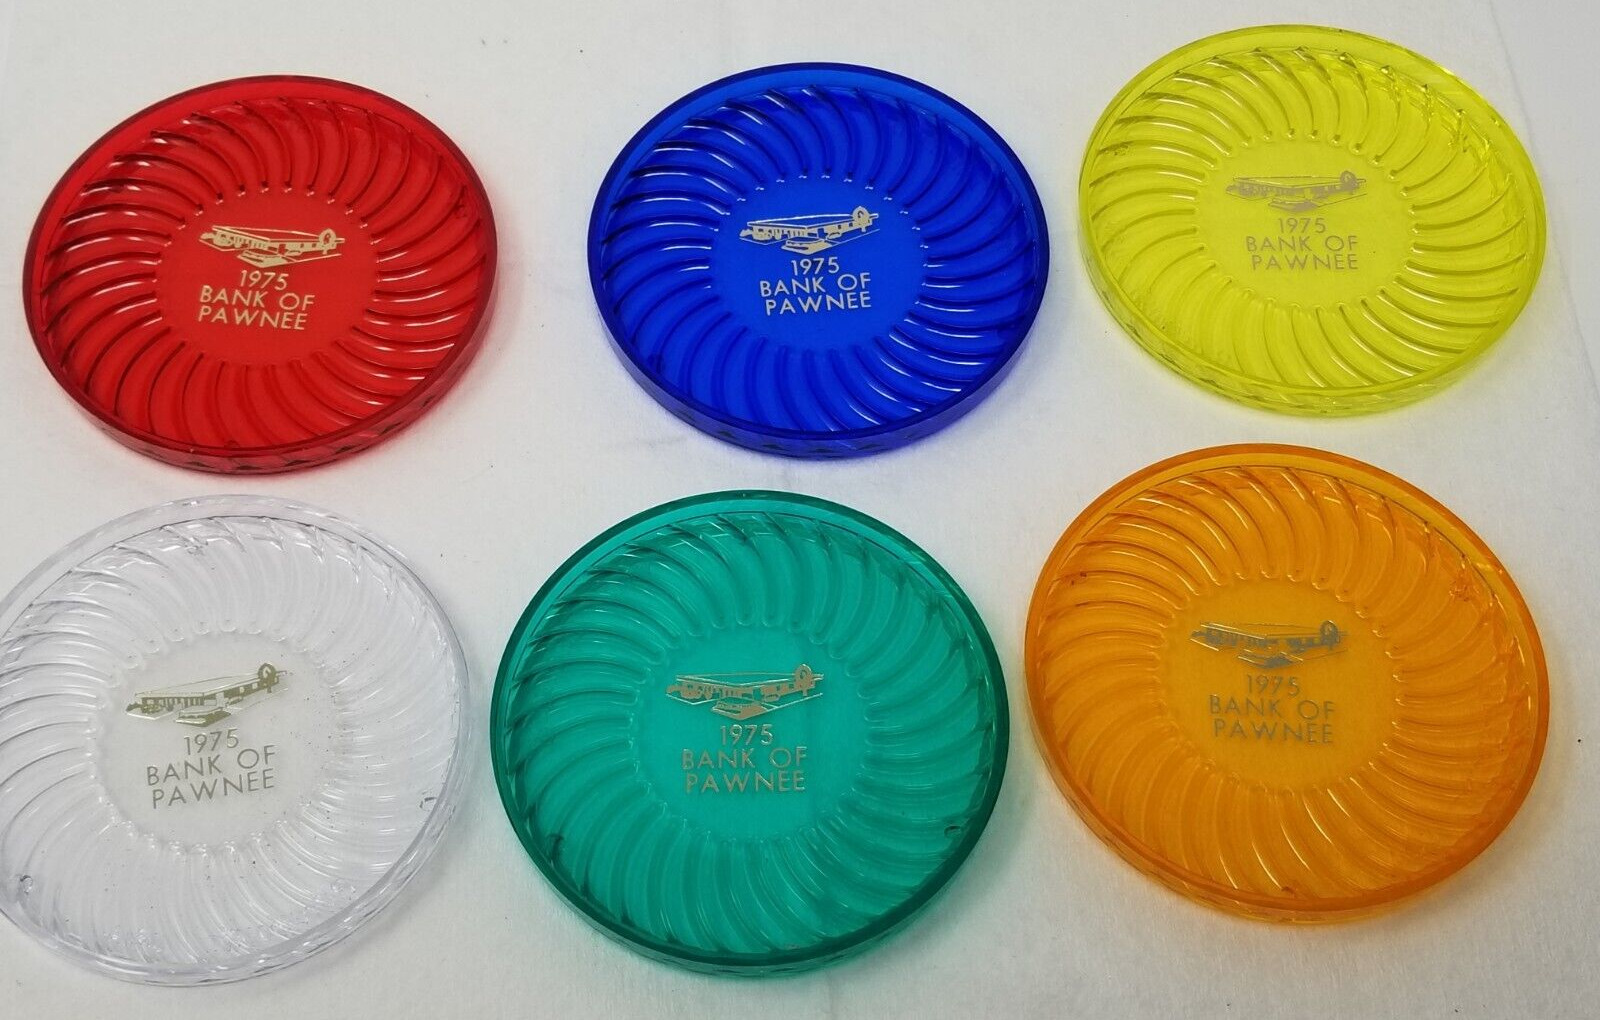 Bank of Pawnee 1975 Coasters Colorful Set of 6 Vintage New Plastic Swirl